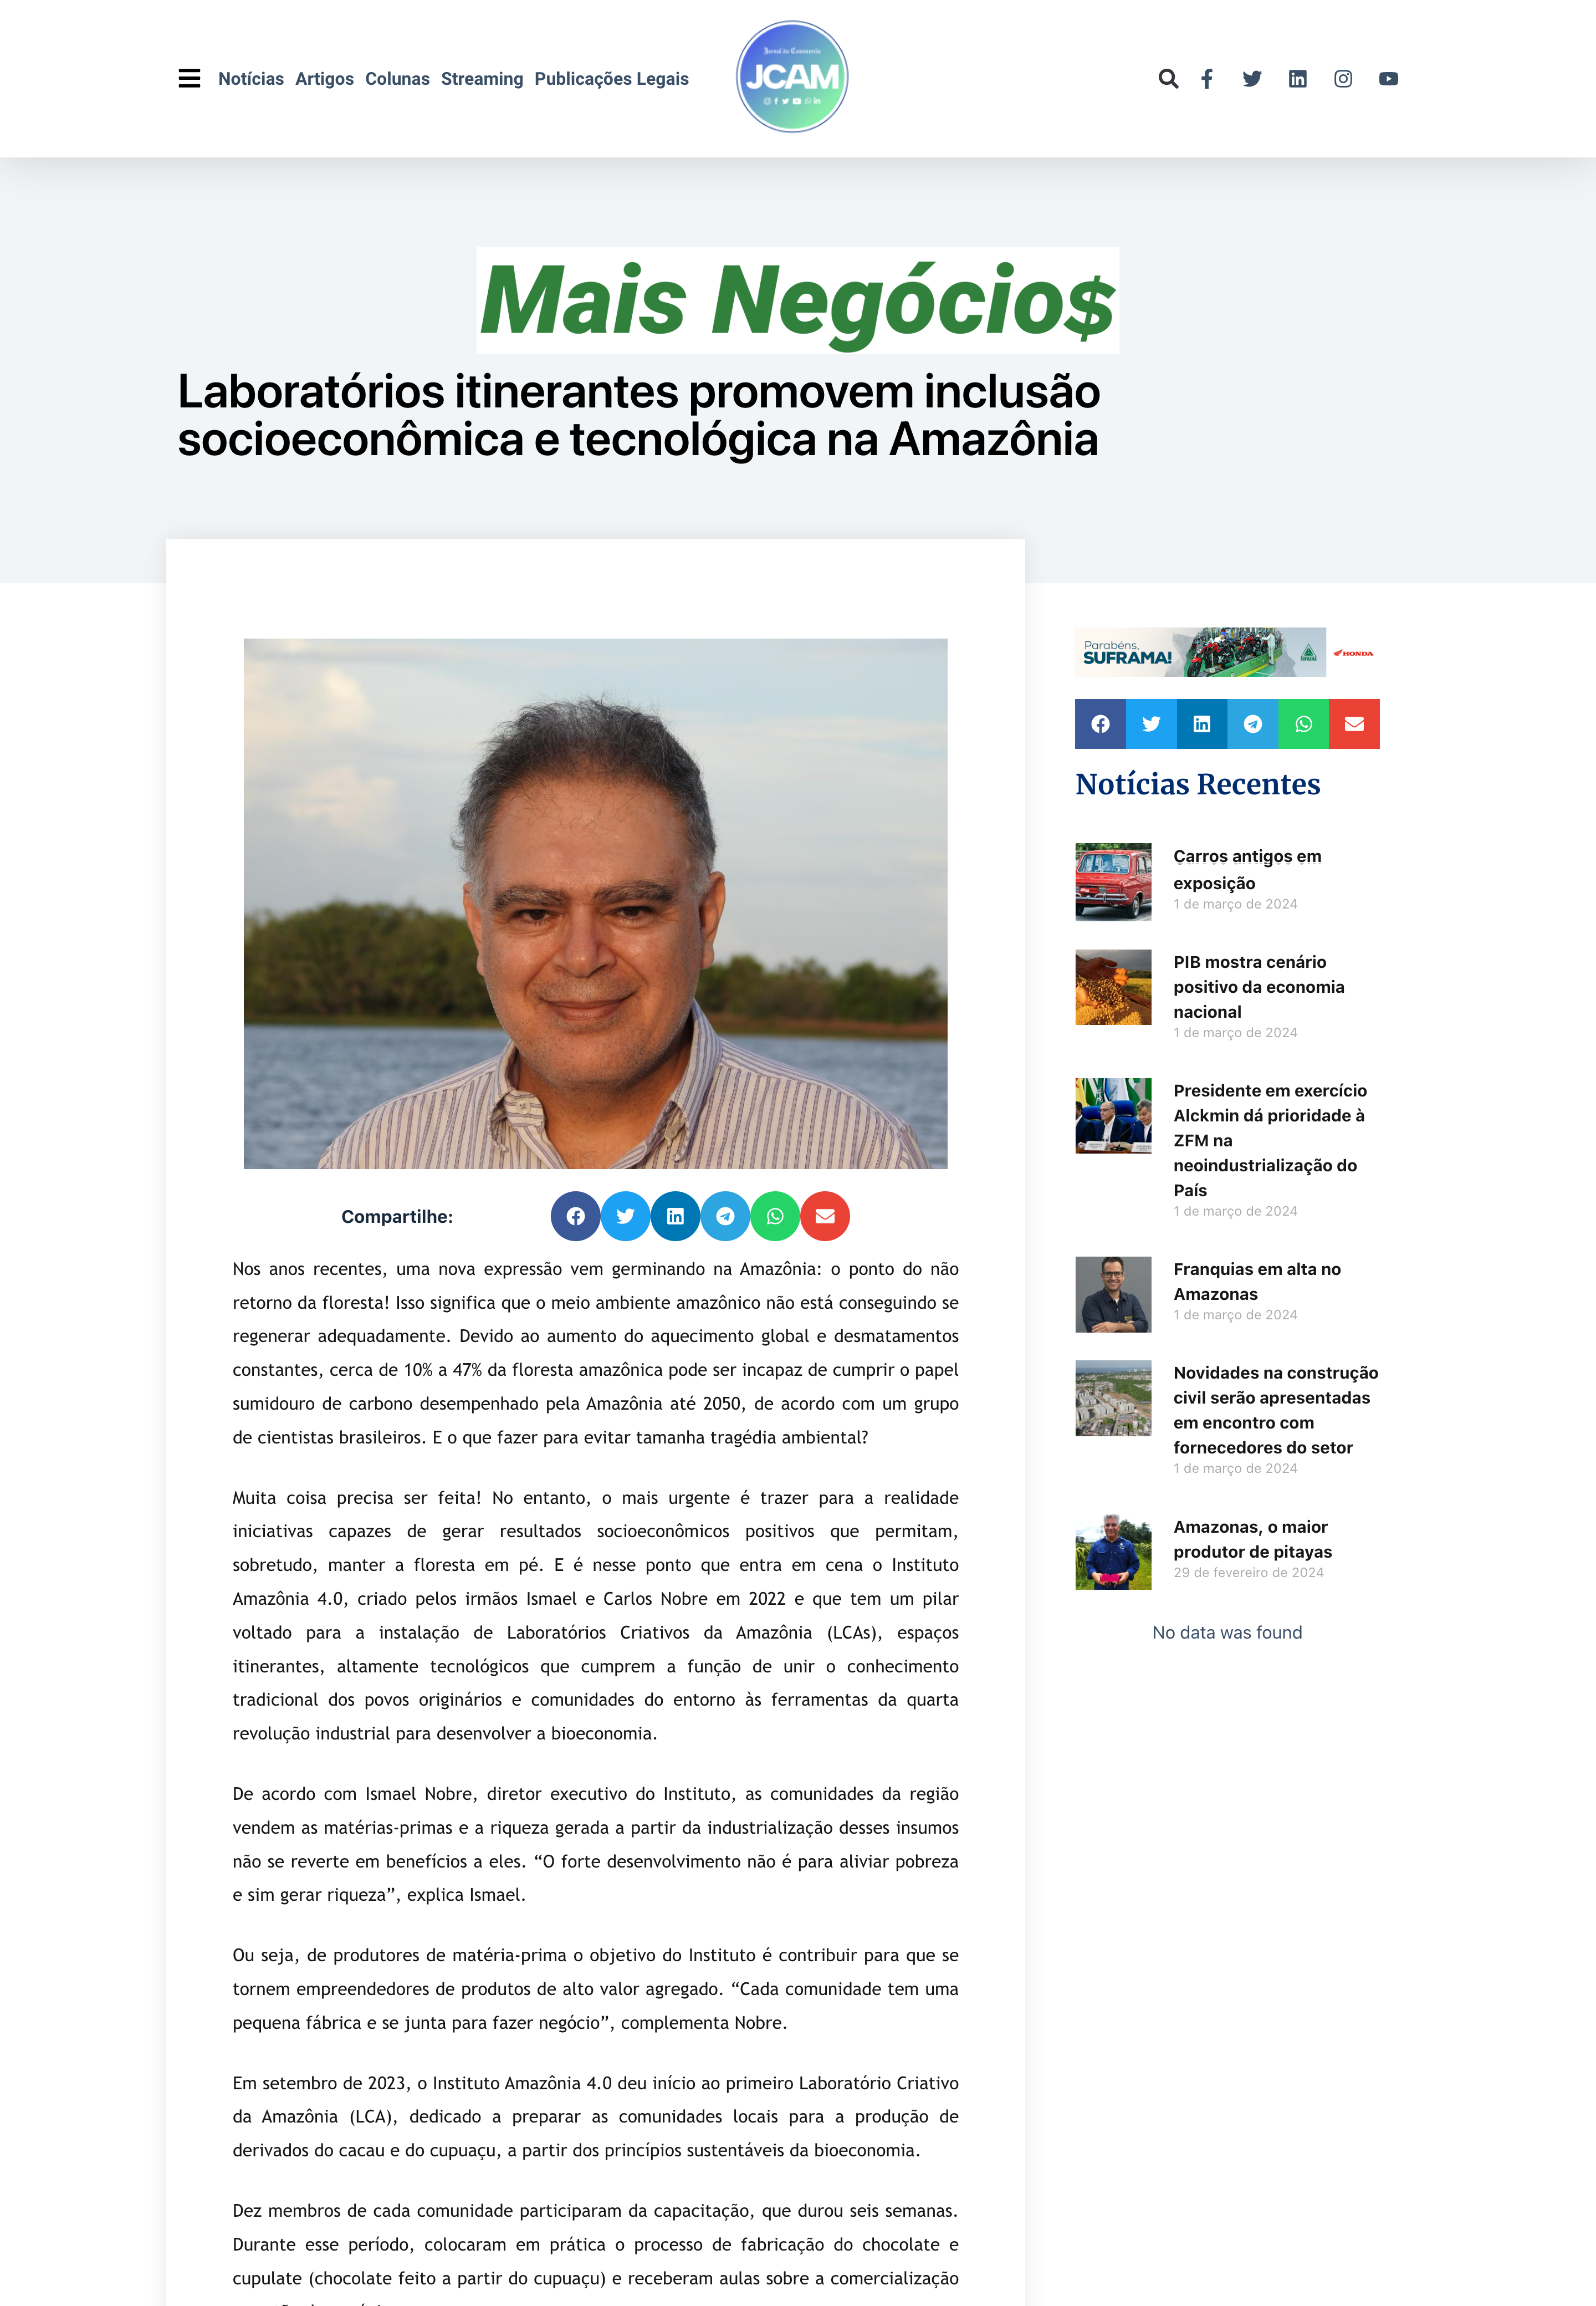 Amazônia 4.0 Institute is featured in the Manaus media